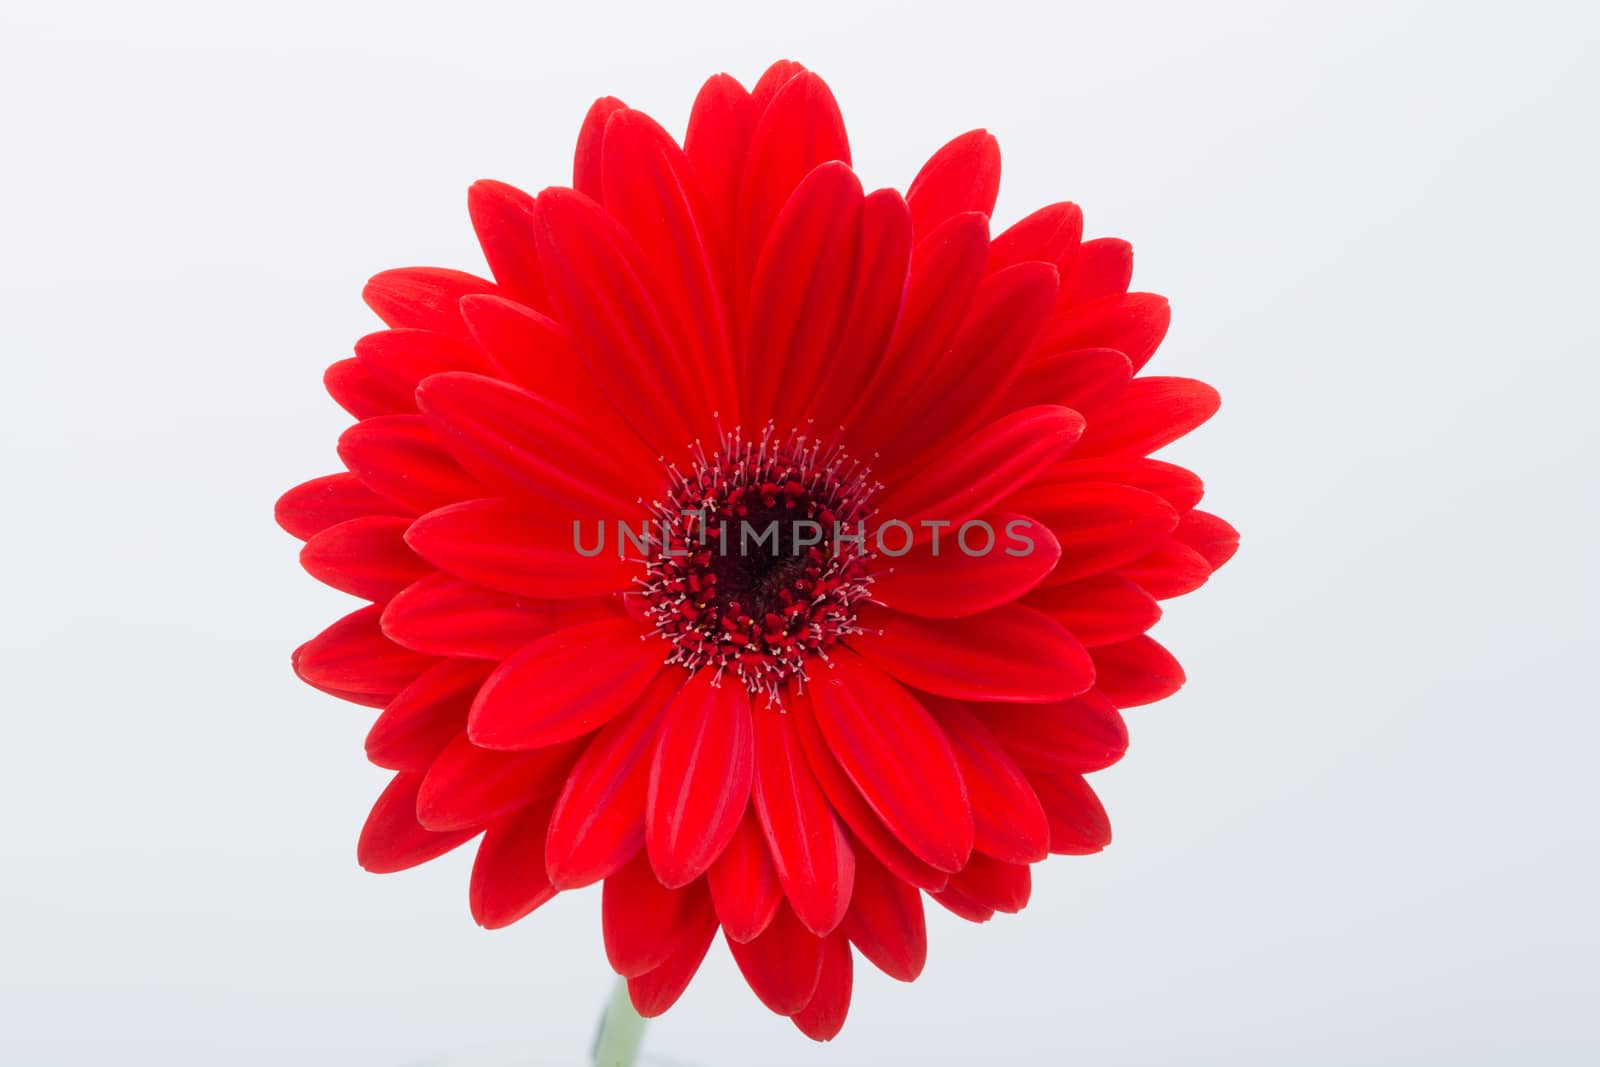  red gerbera daisy flower by wjarek